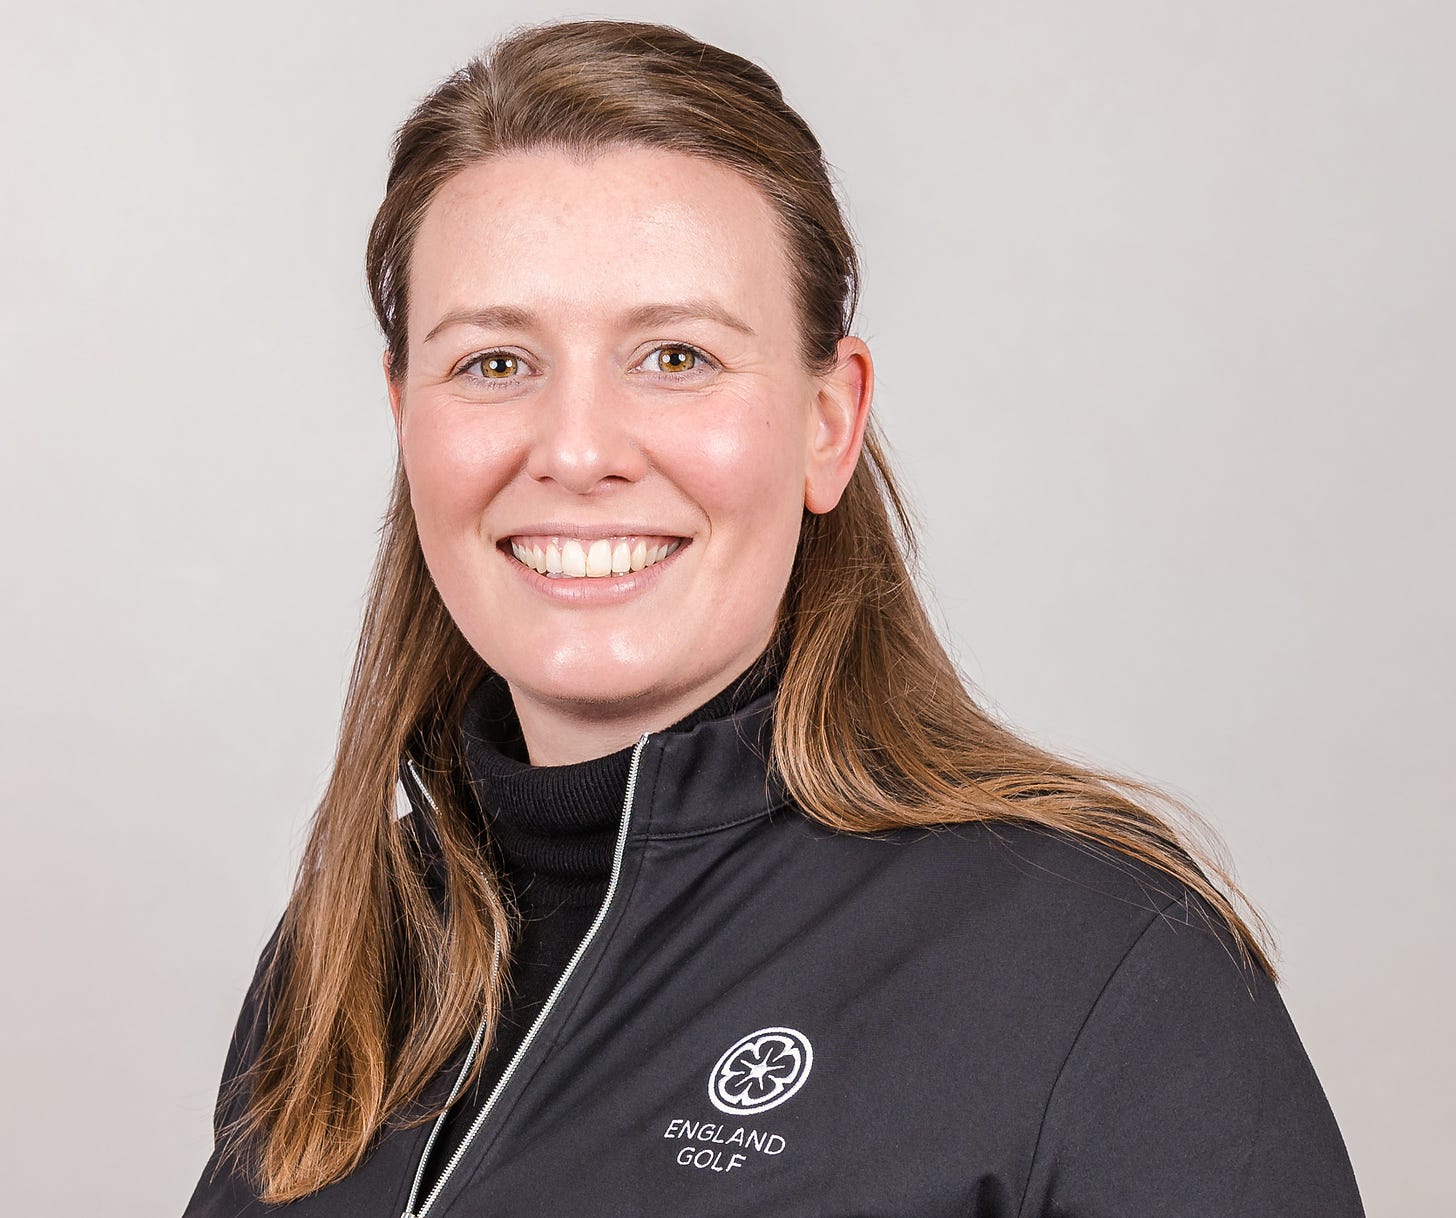 women and girls manager at England Golf, Lauren Spray